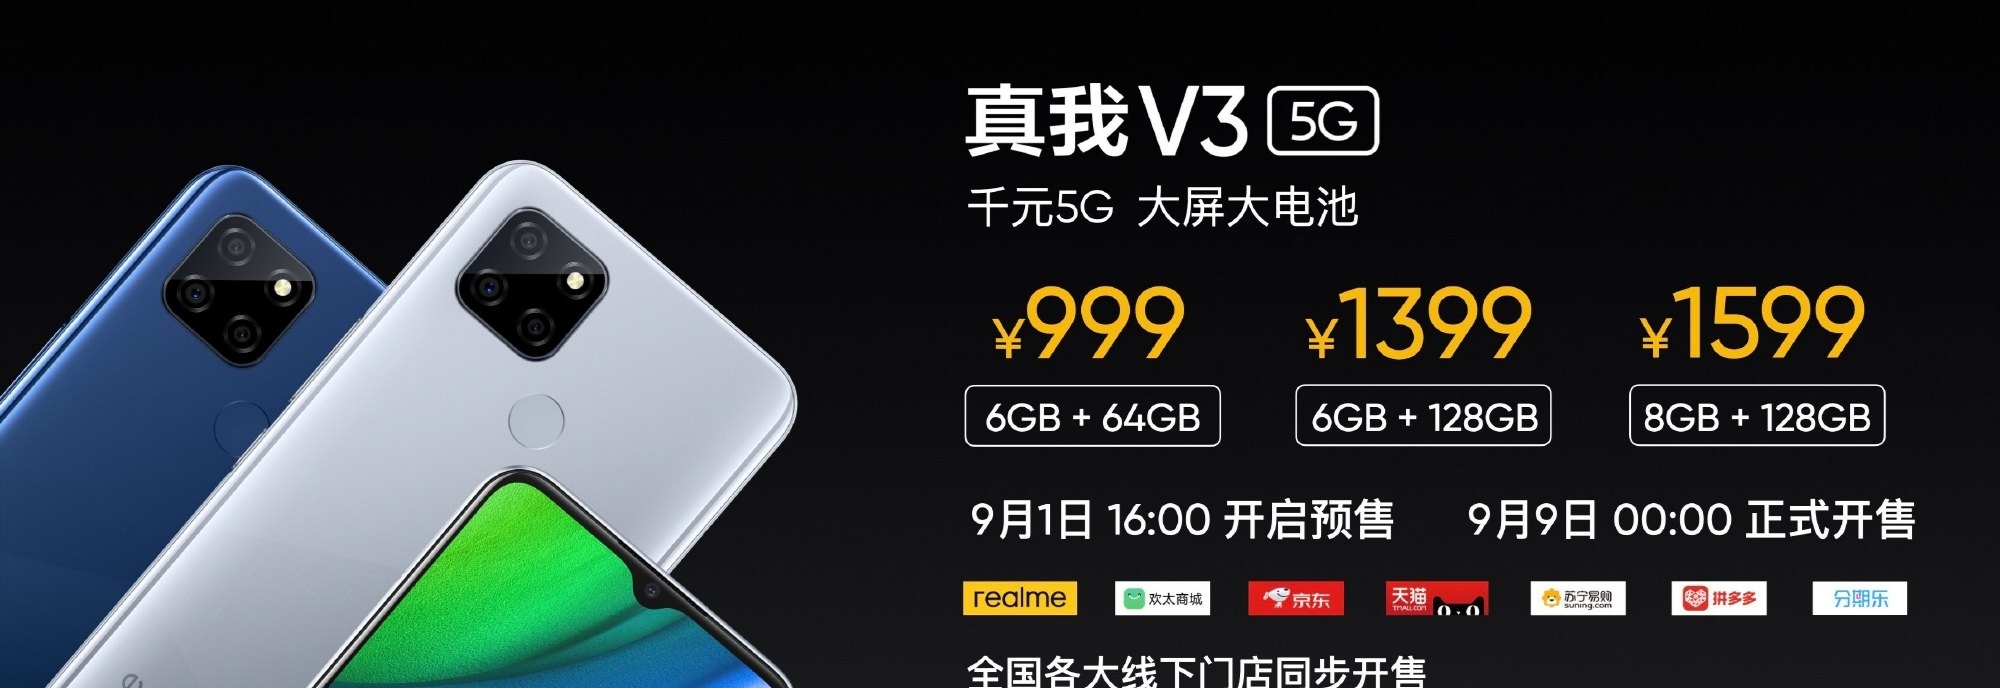 5G手机上步入100元时期，realme真实自我V3市场价仅为999元！